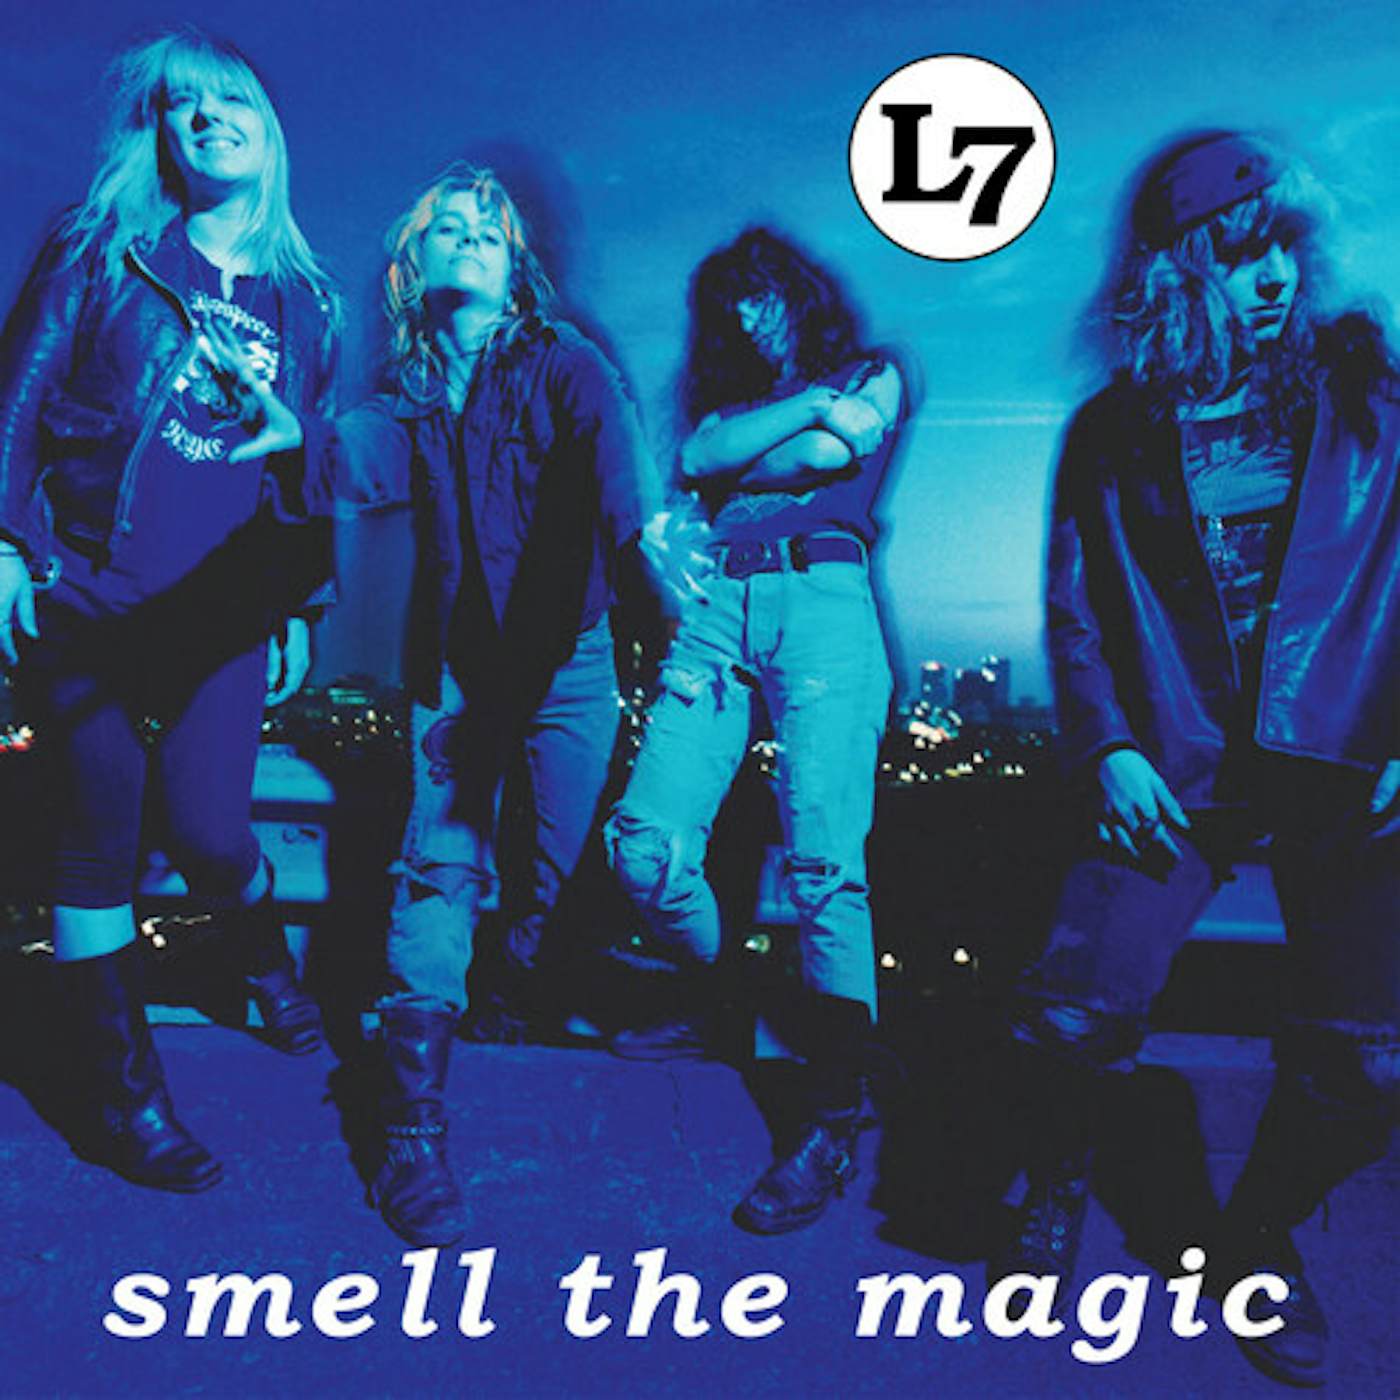 L7 Smell the Magic Vinyl Record